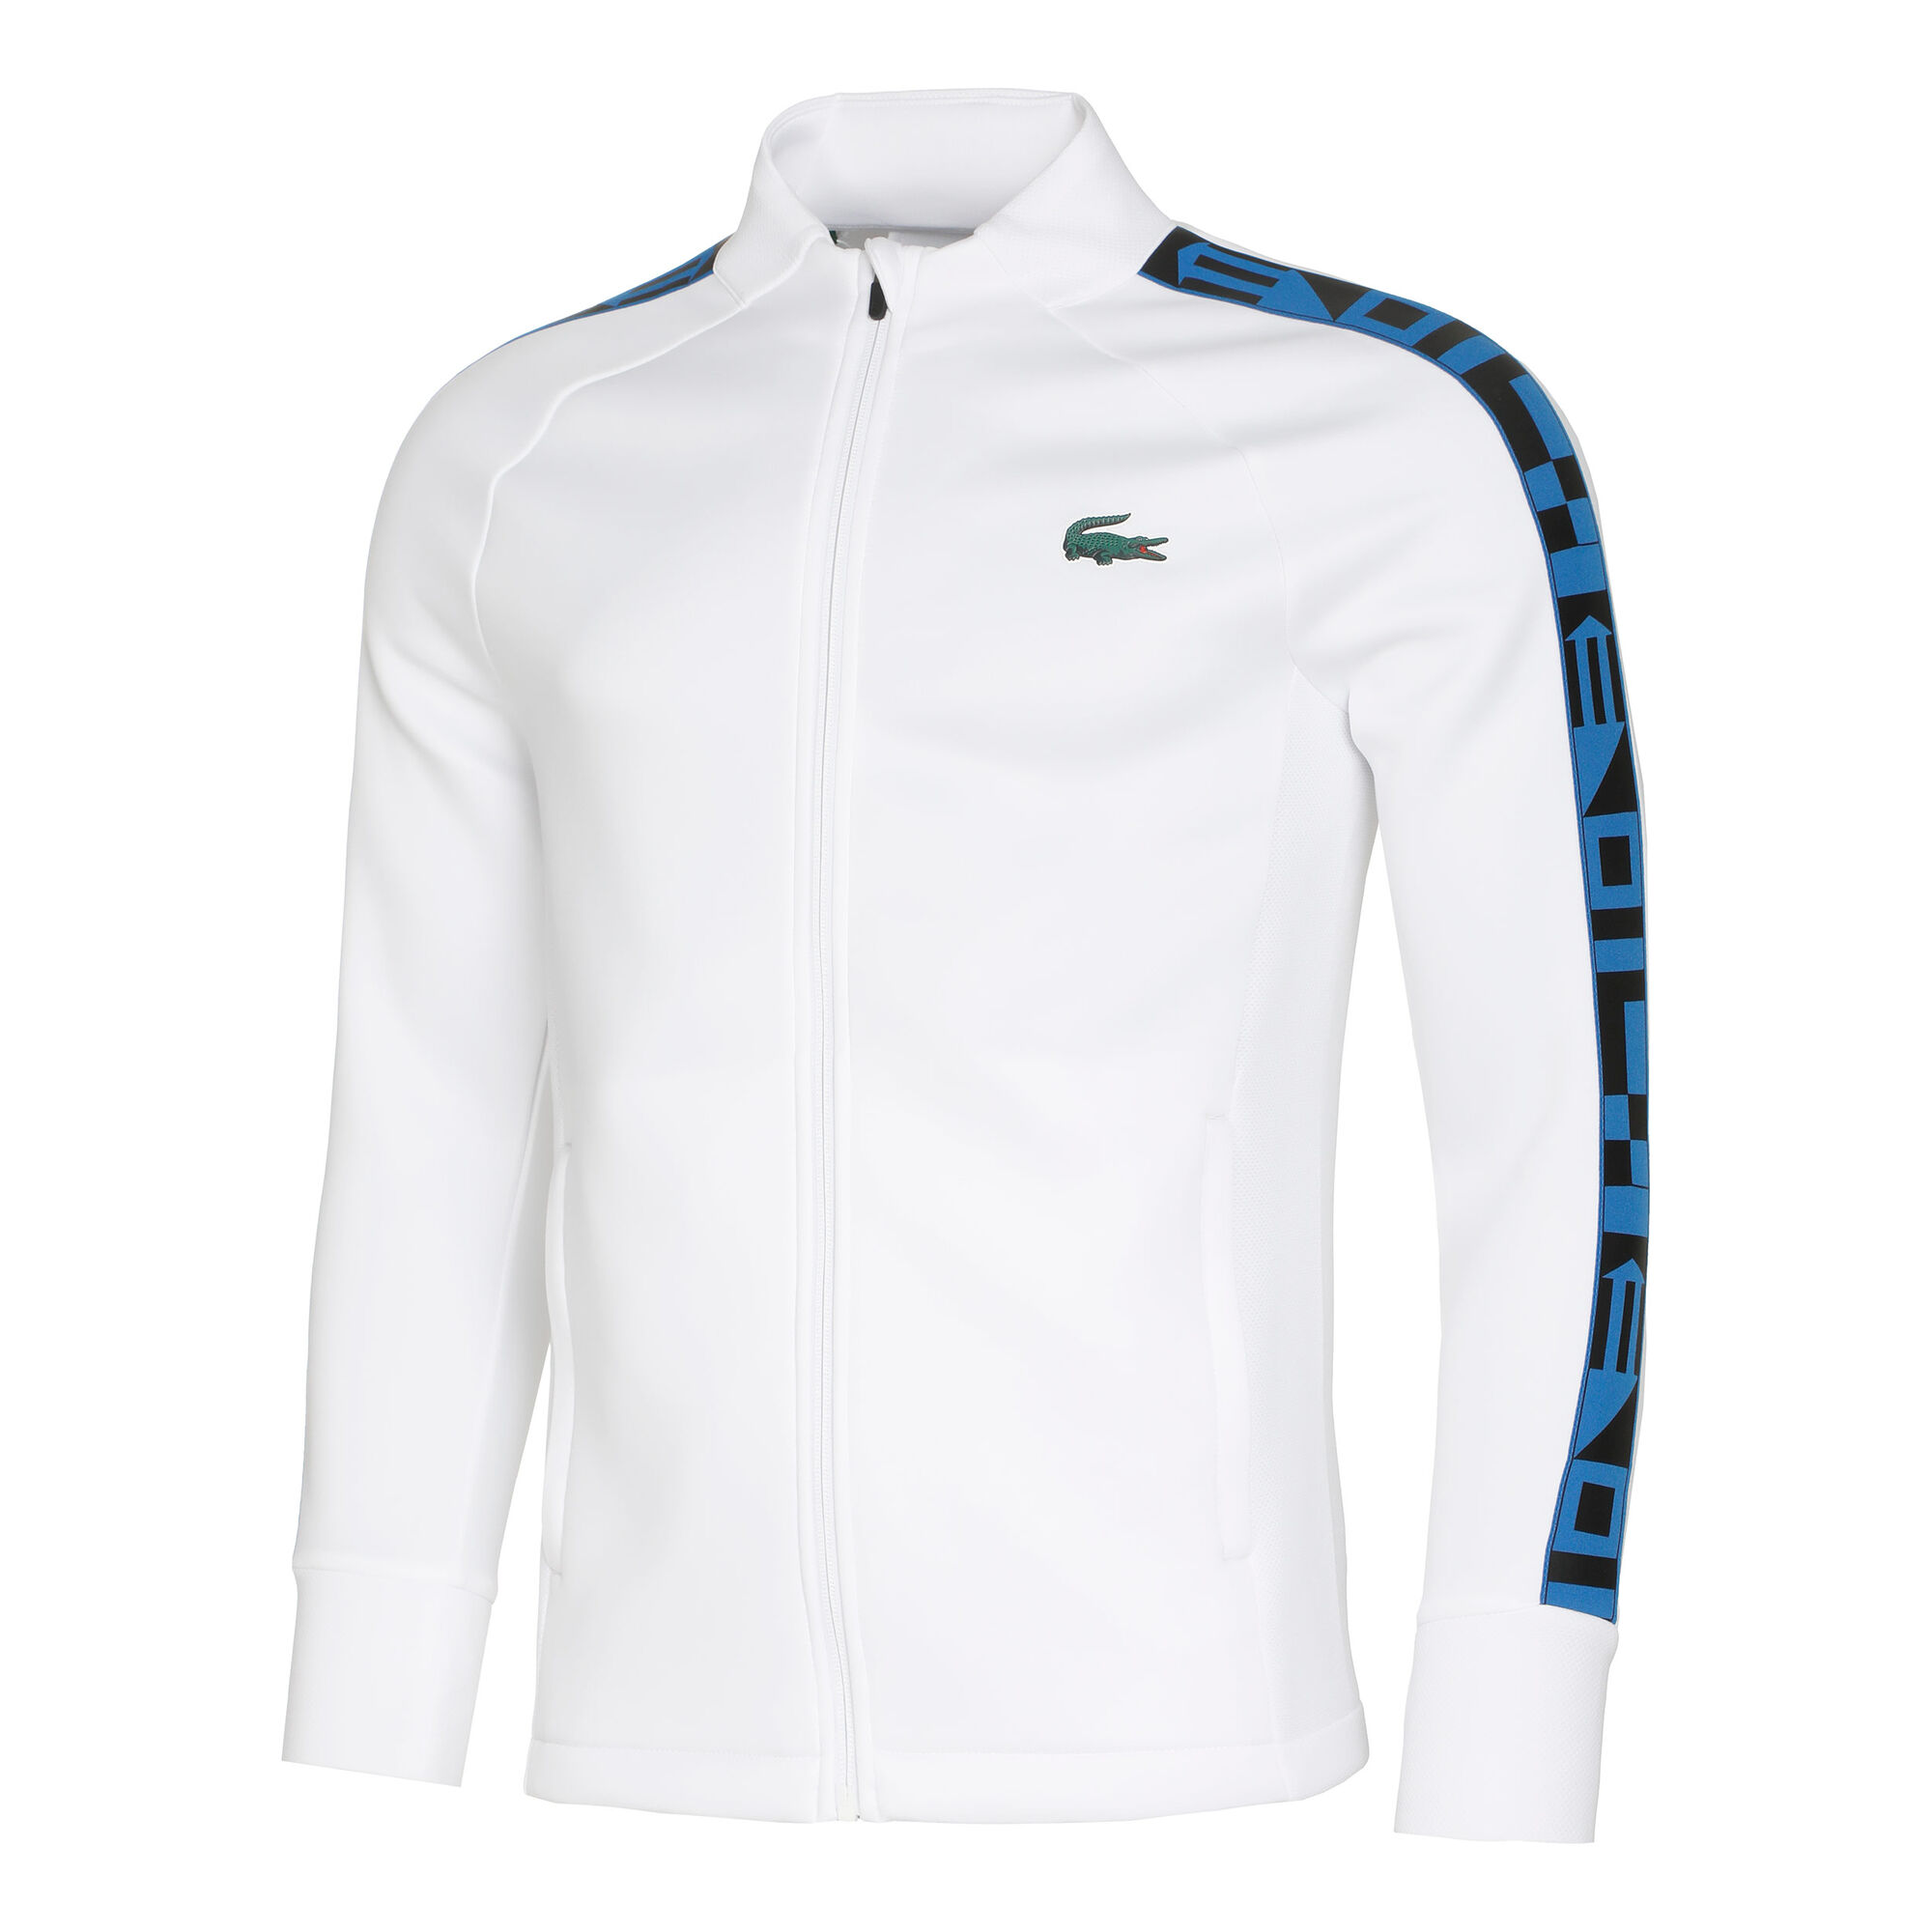 Lacoste Trainingsjacke Herren Weiß online kaufen | Tennis Point DE